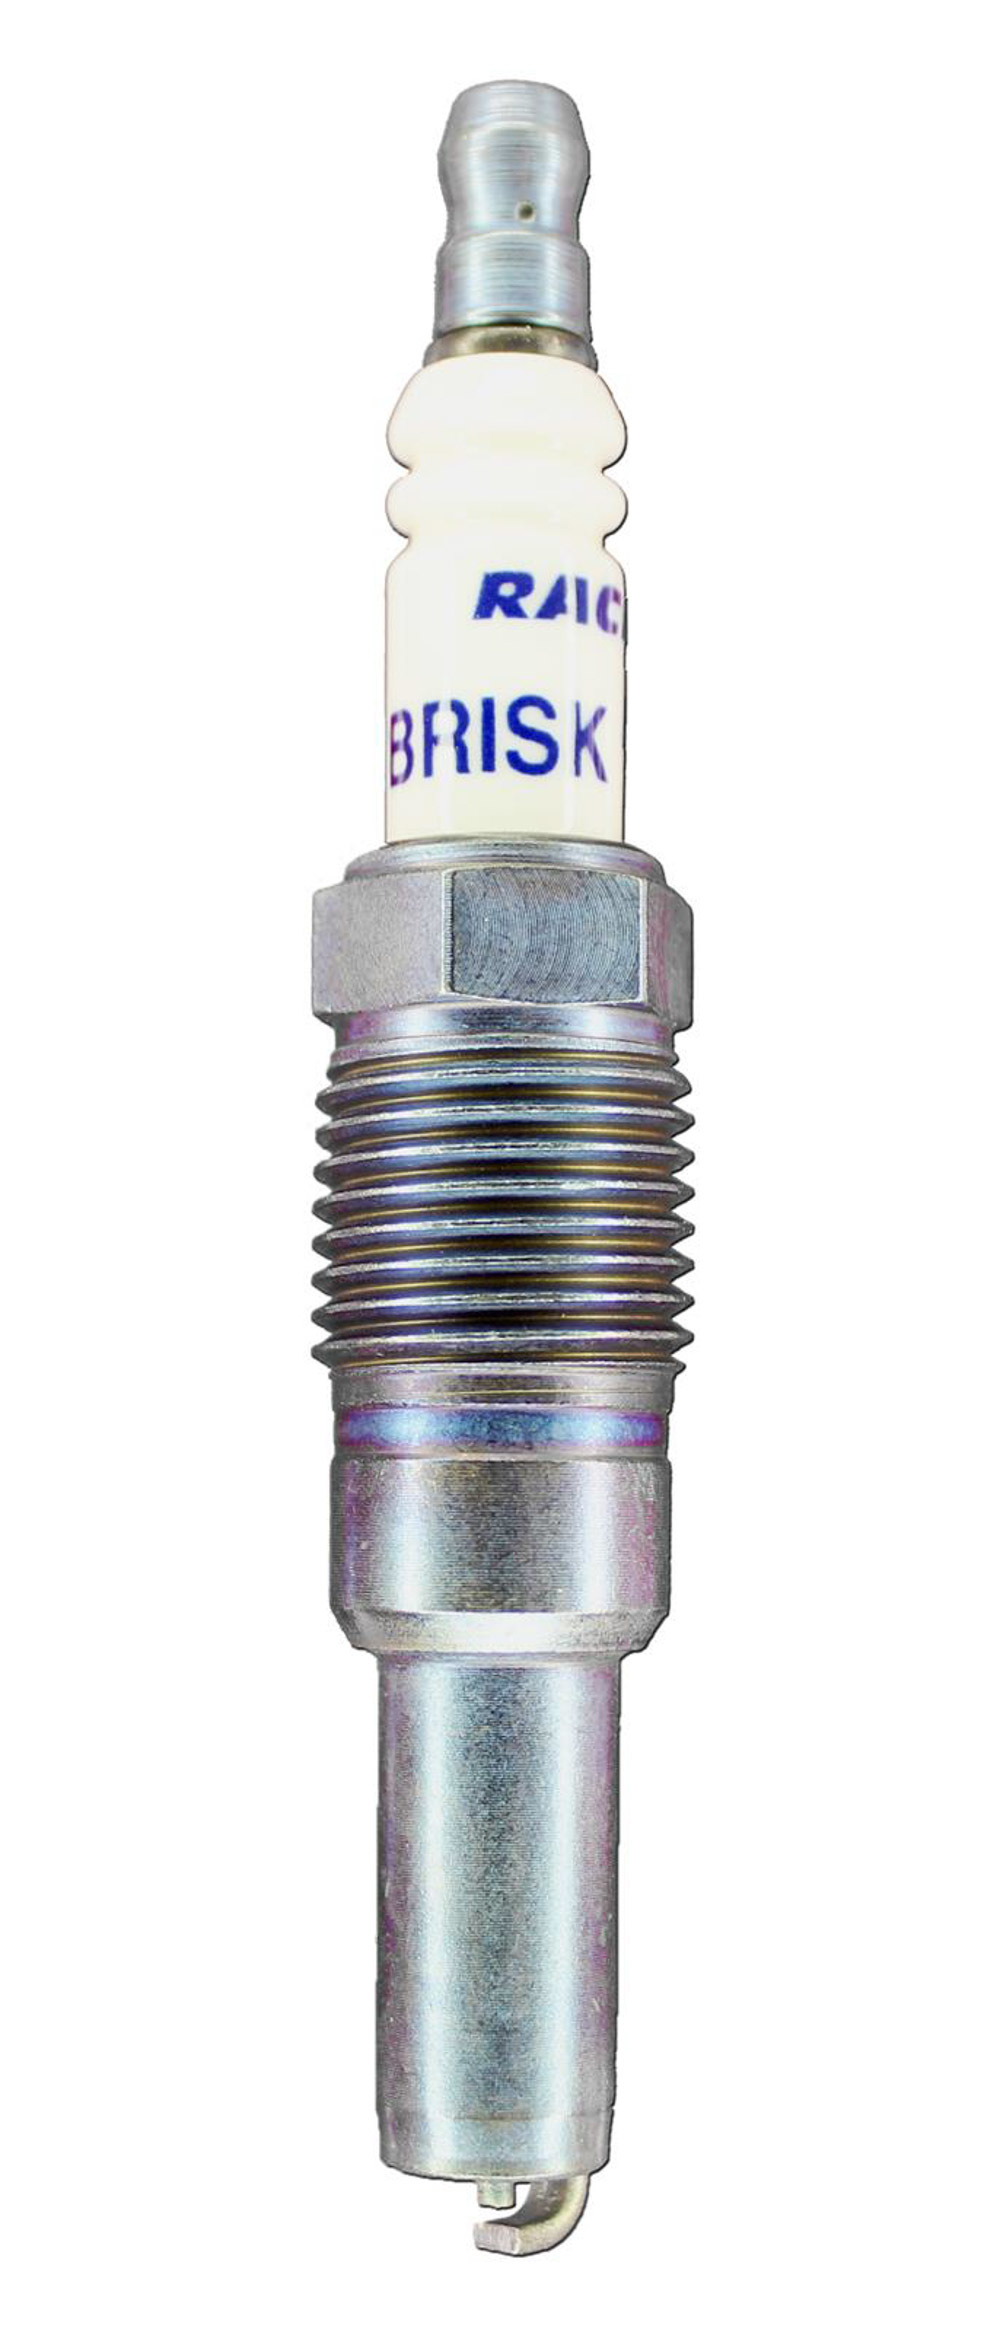 Brisk Racing Plugs 3VR12S Spark Plug, Silver Racing, 16 mm Thread, 22 mm Reach, Heat Range 12, Tapered Seat, Resistor, Each